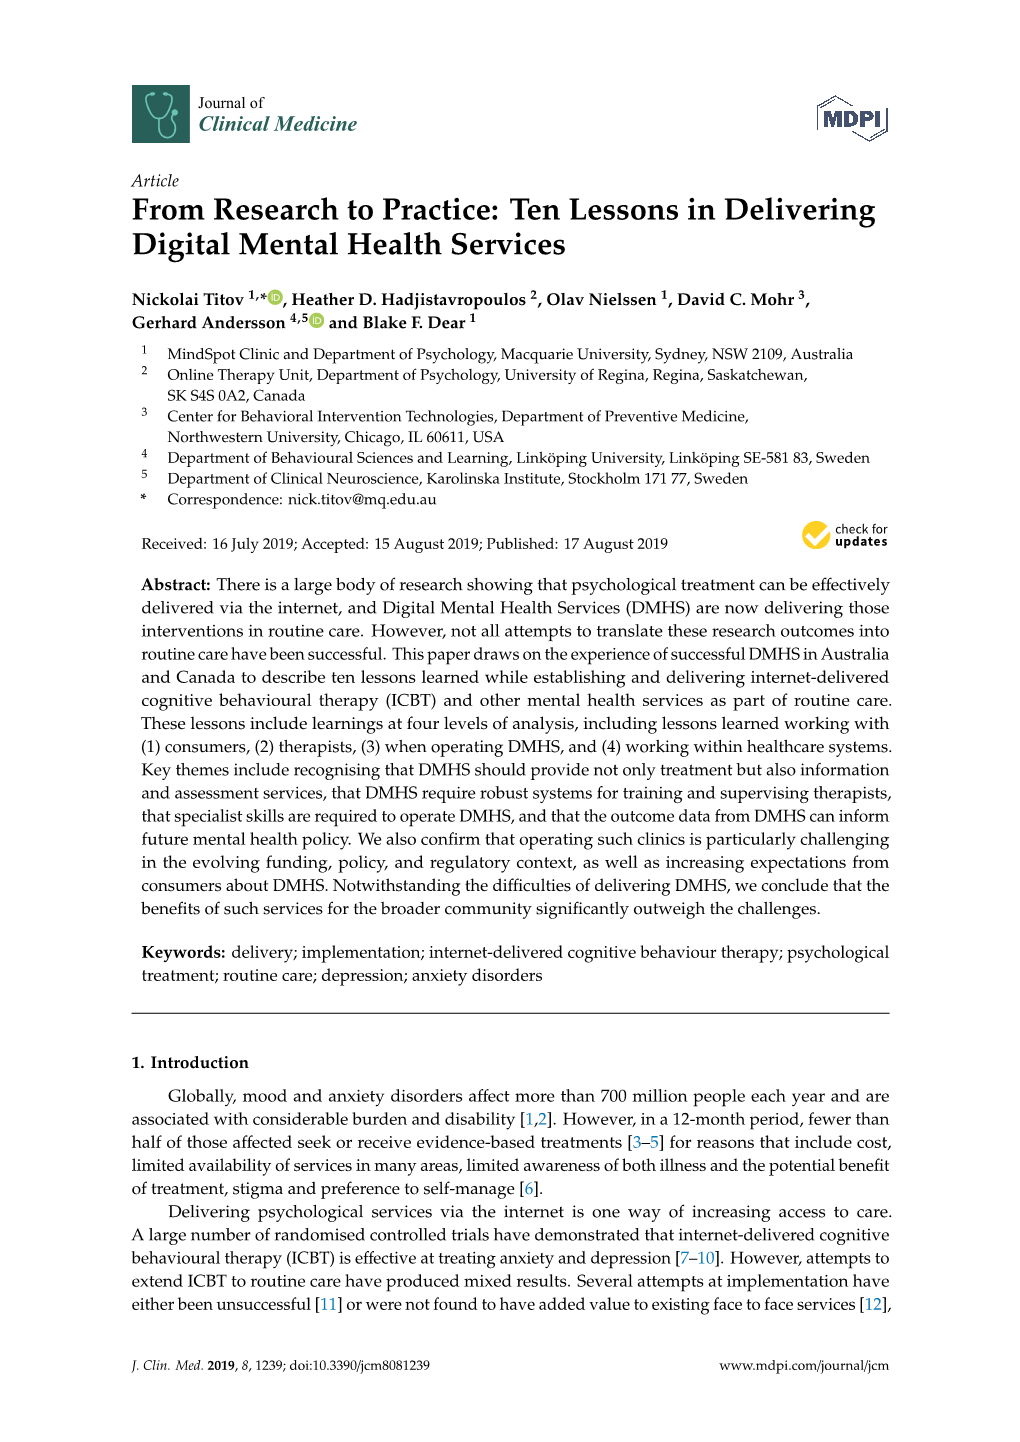 Ten Lessons in Delivering Digital Mental Health Services